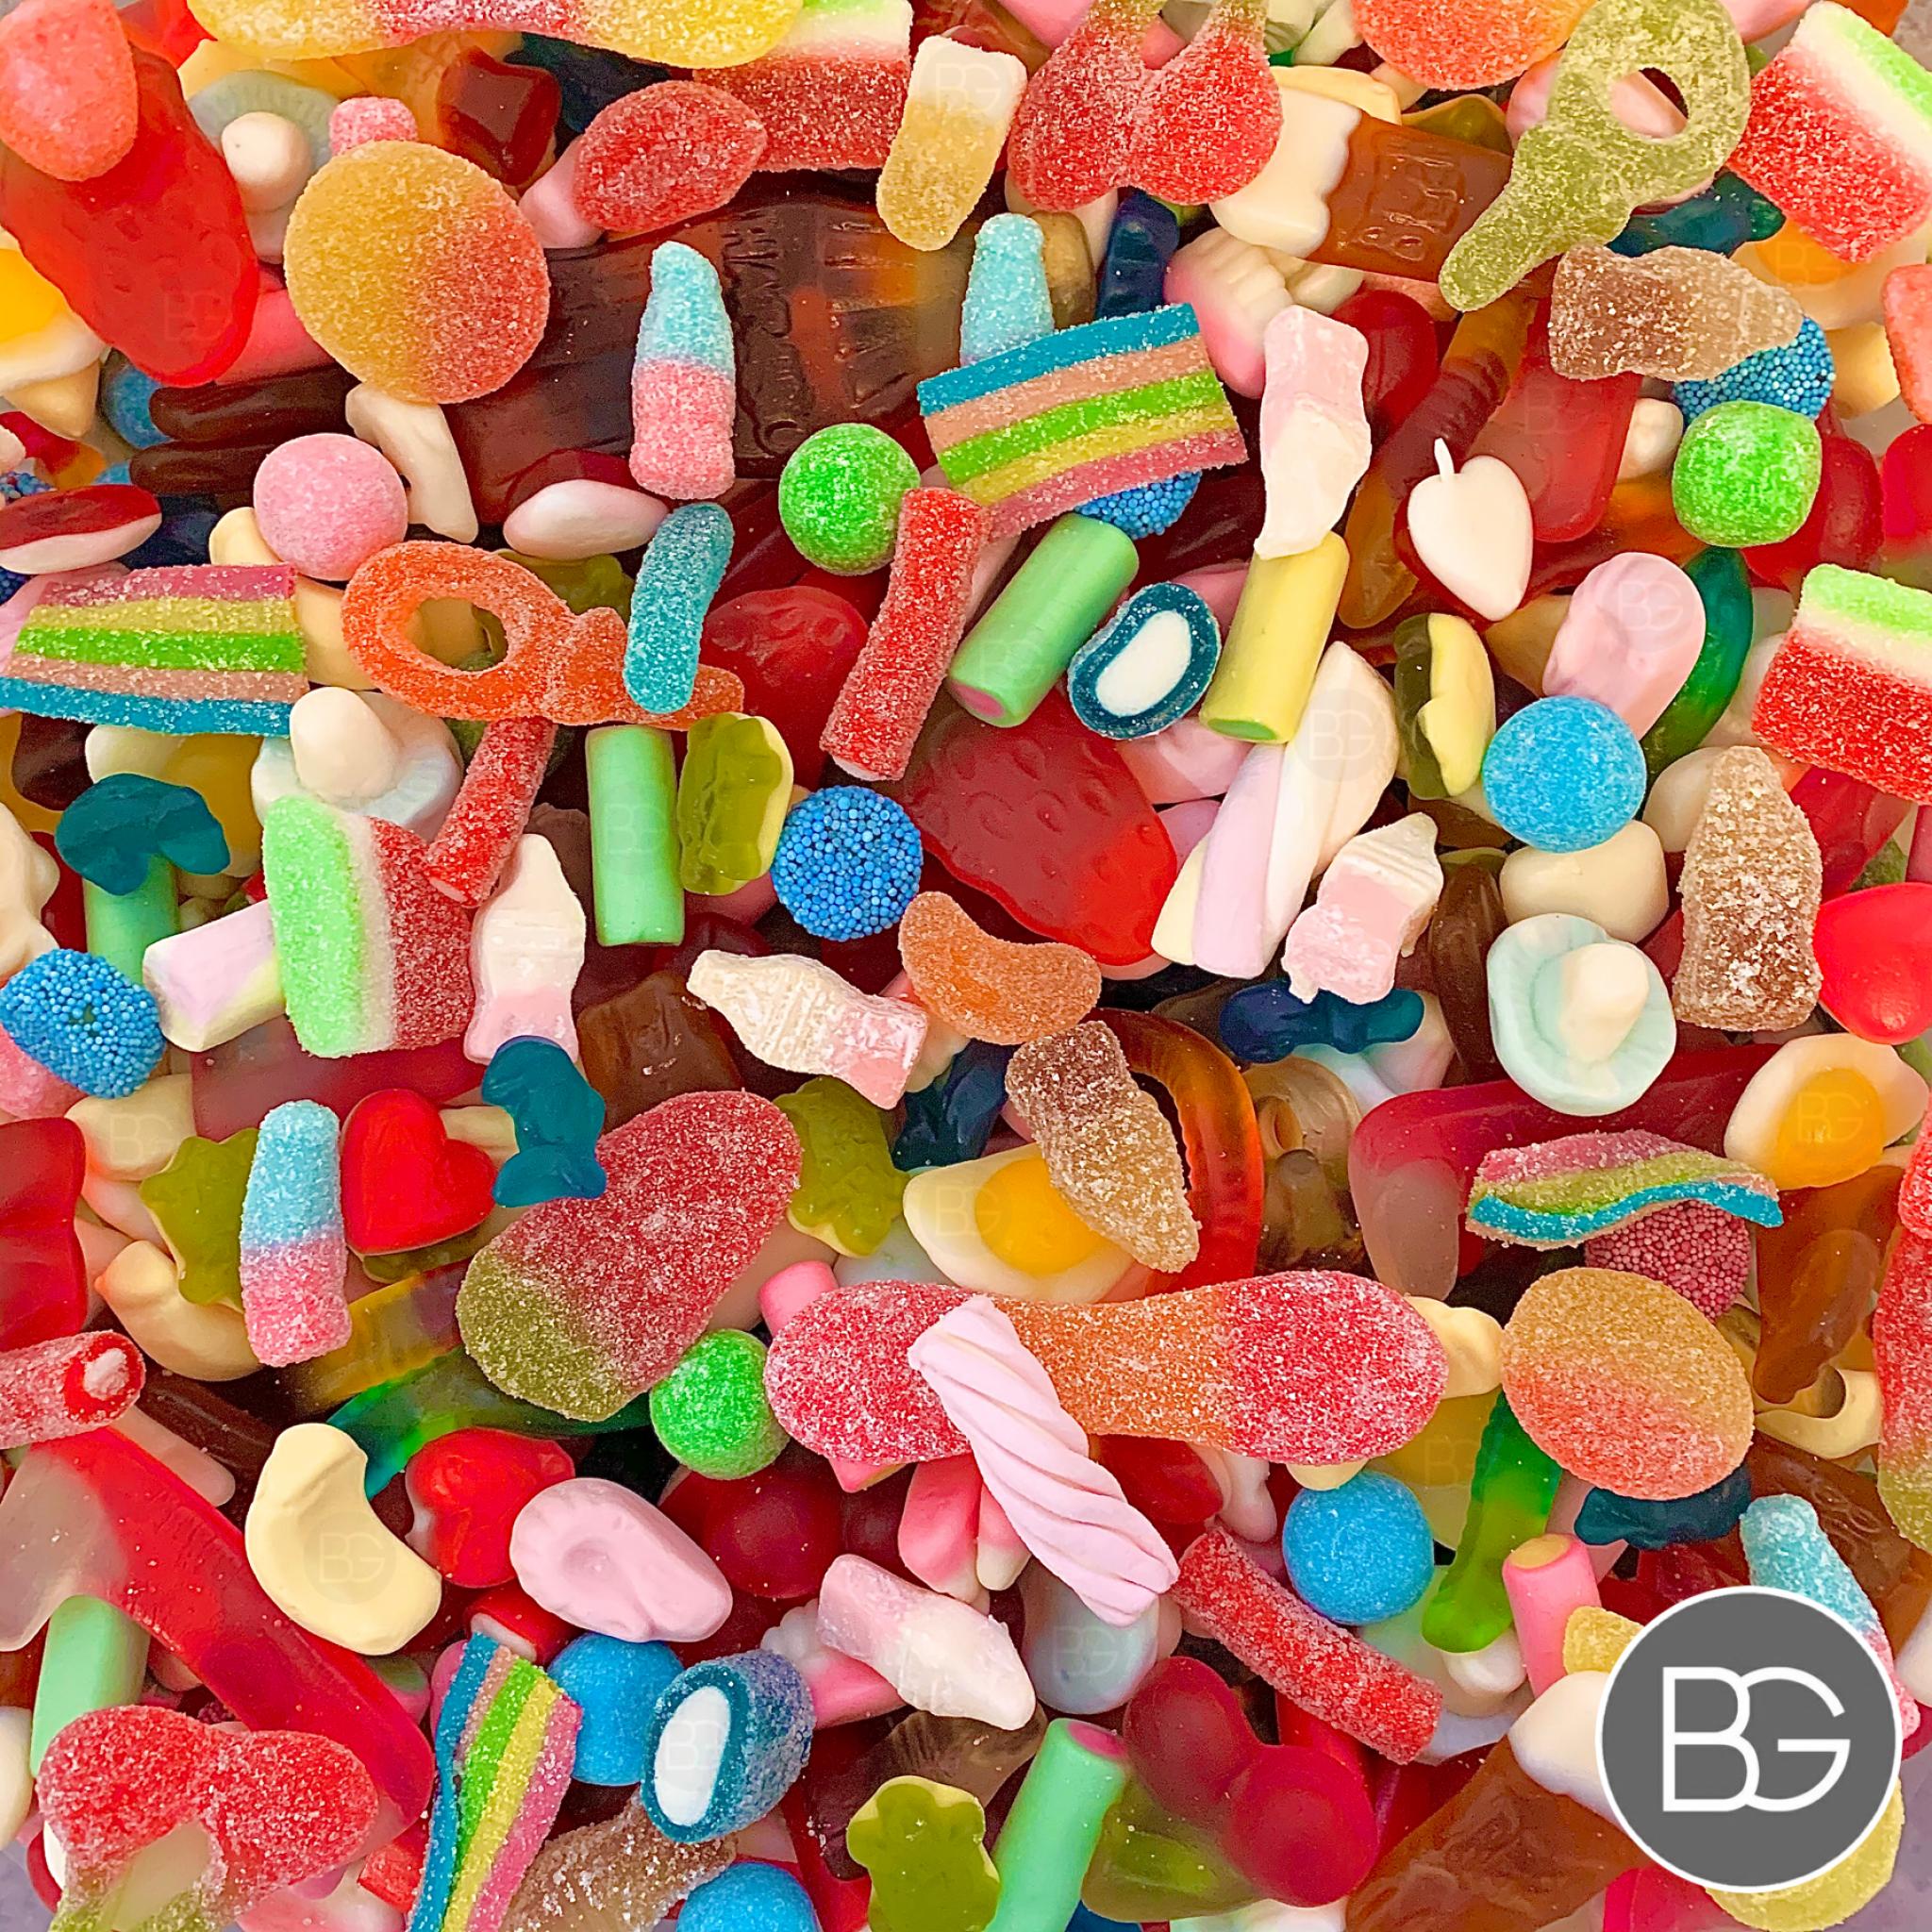 BG Pick n Mix - Mixed Sweets